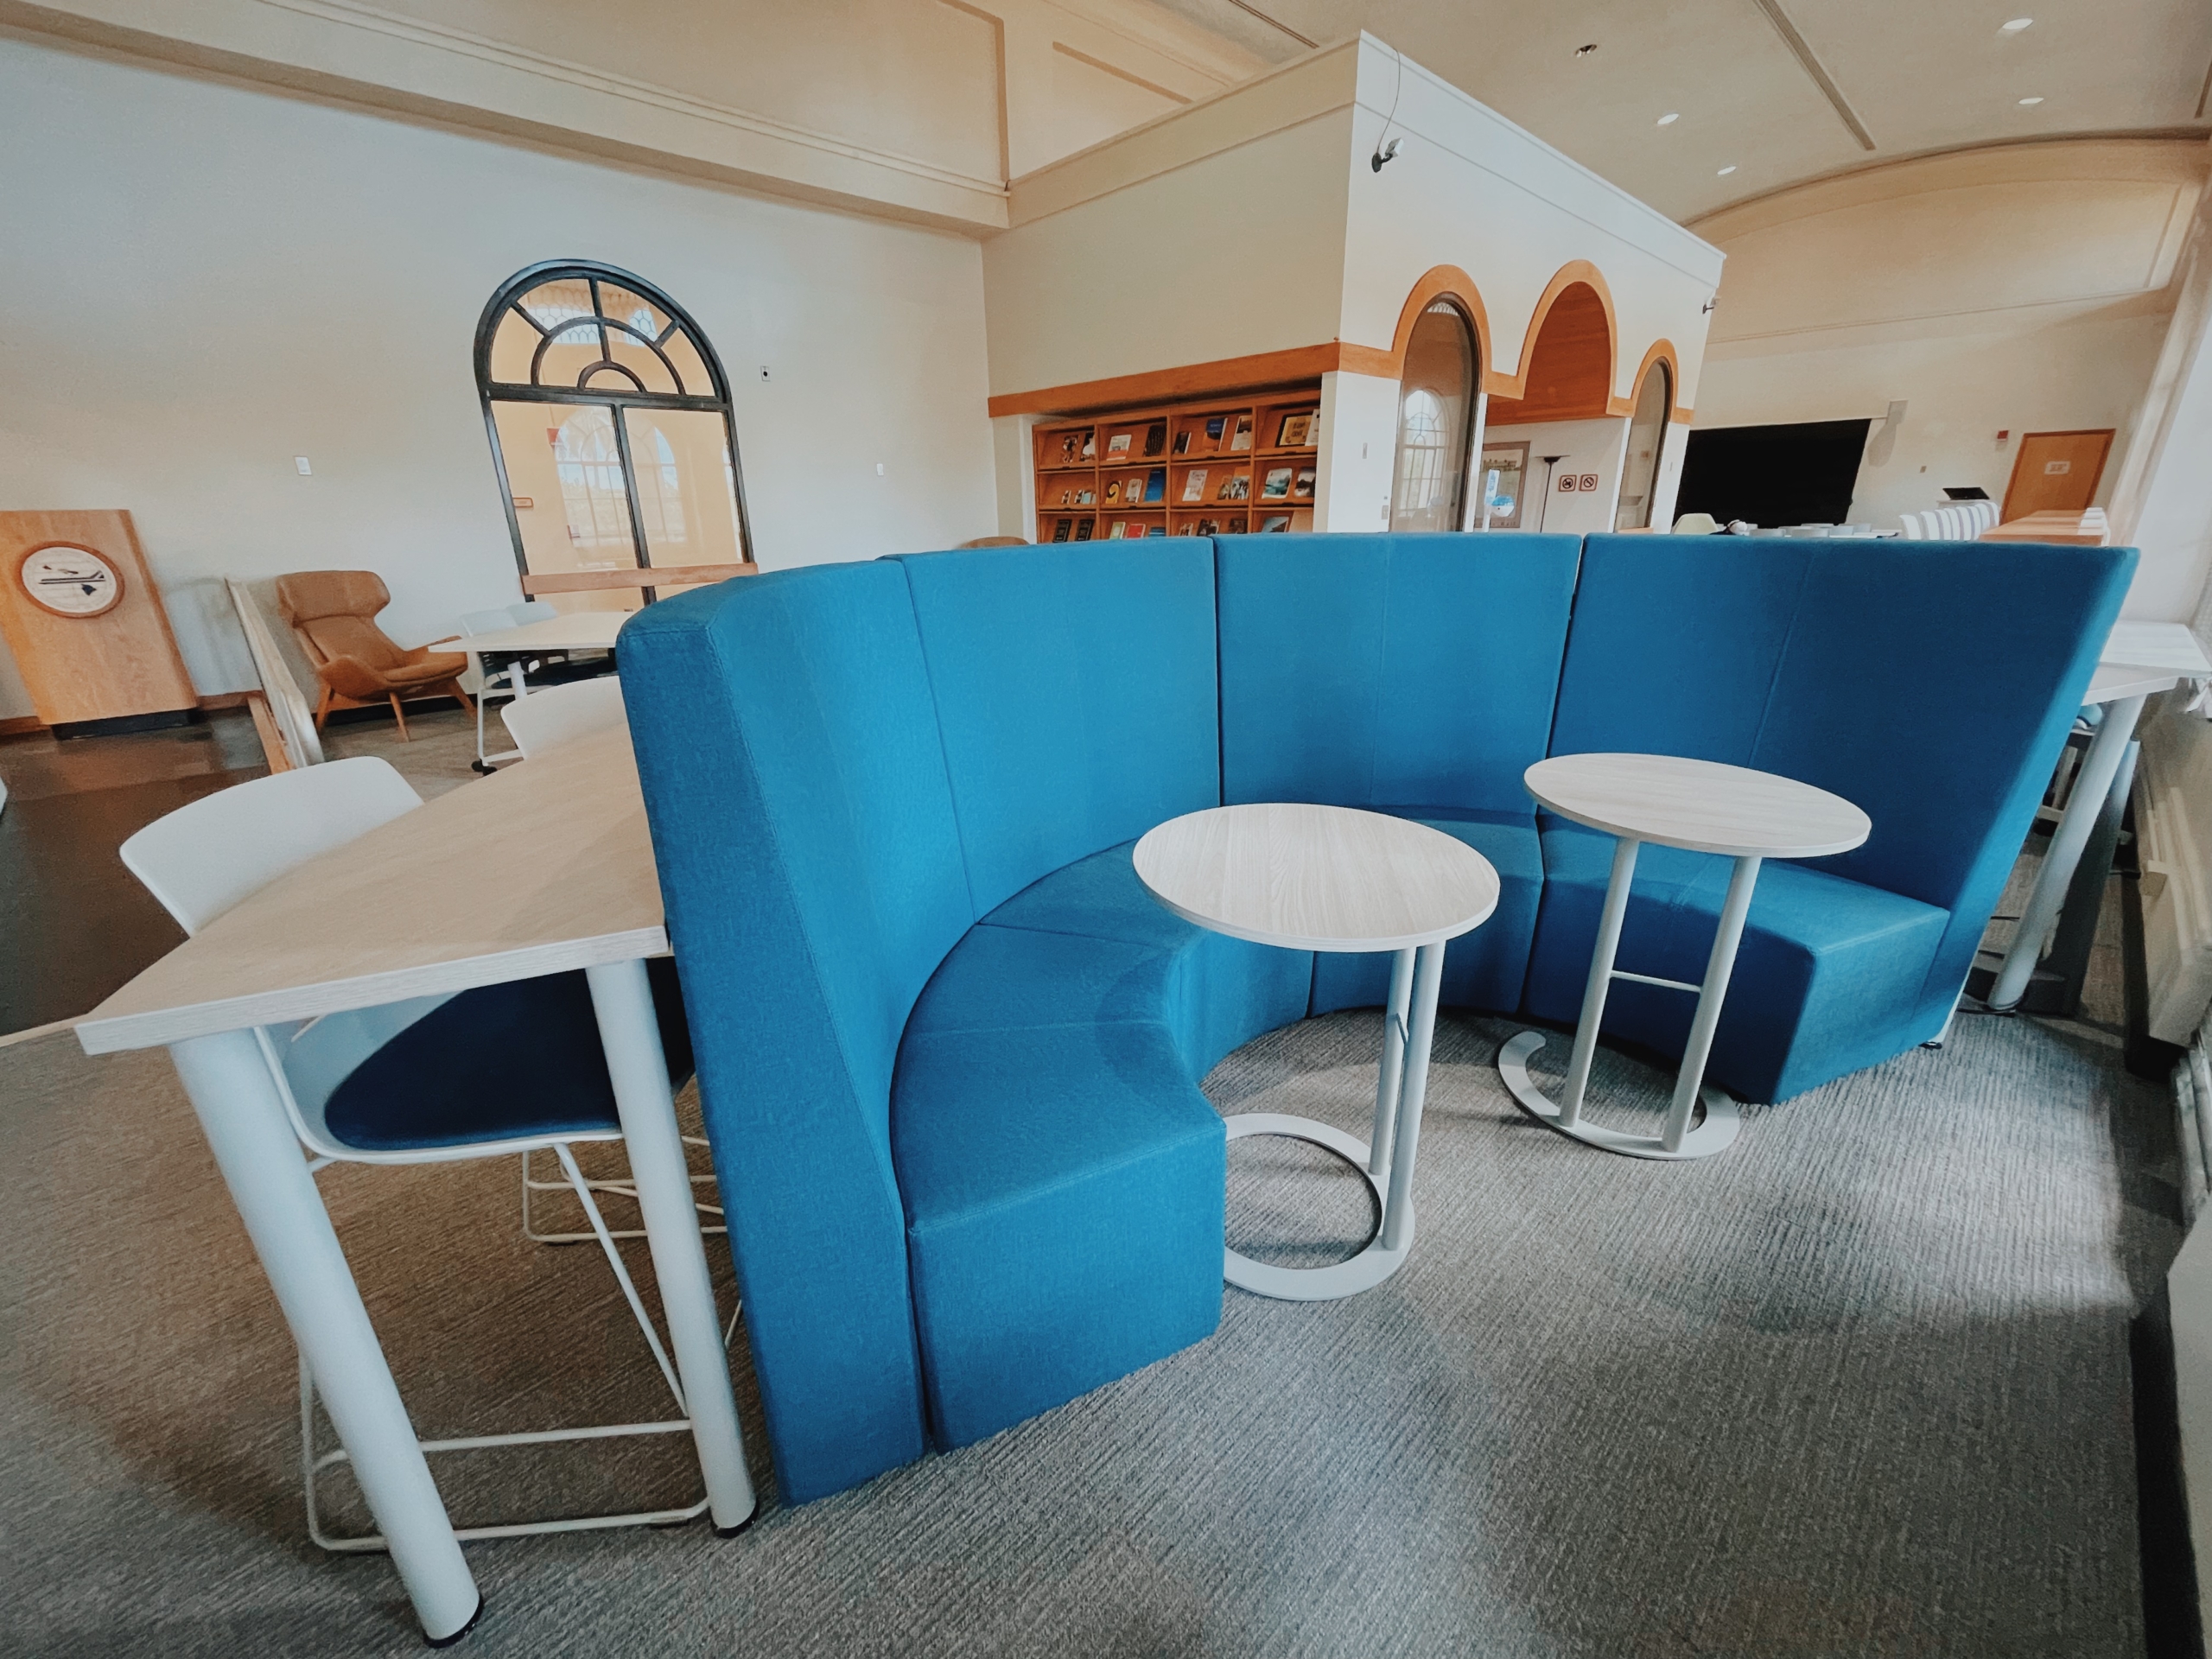 Classroom Collaborative + Lounge Space